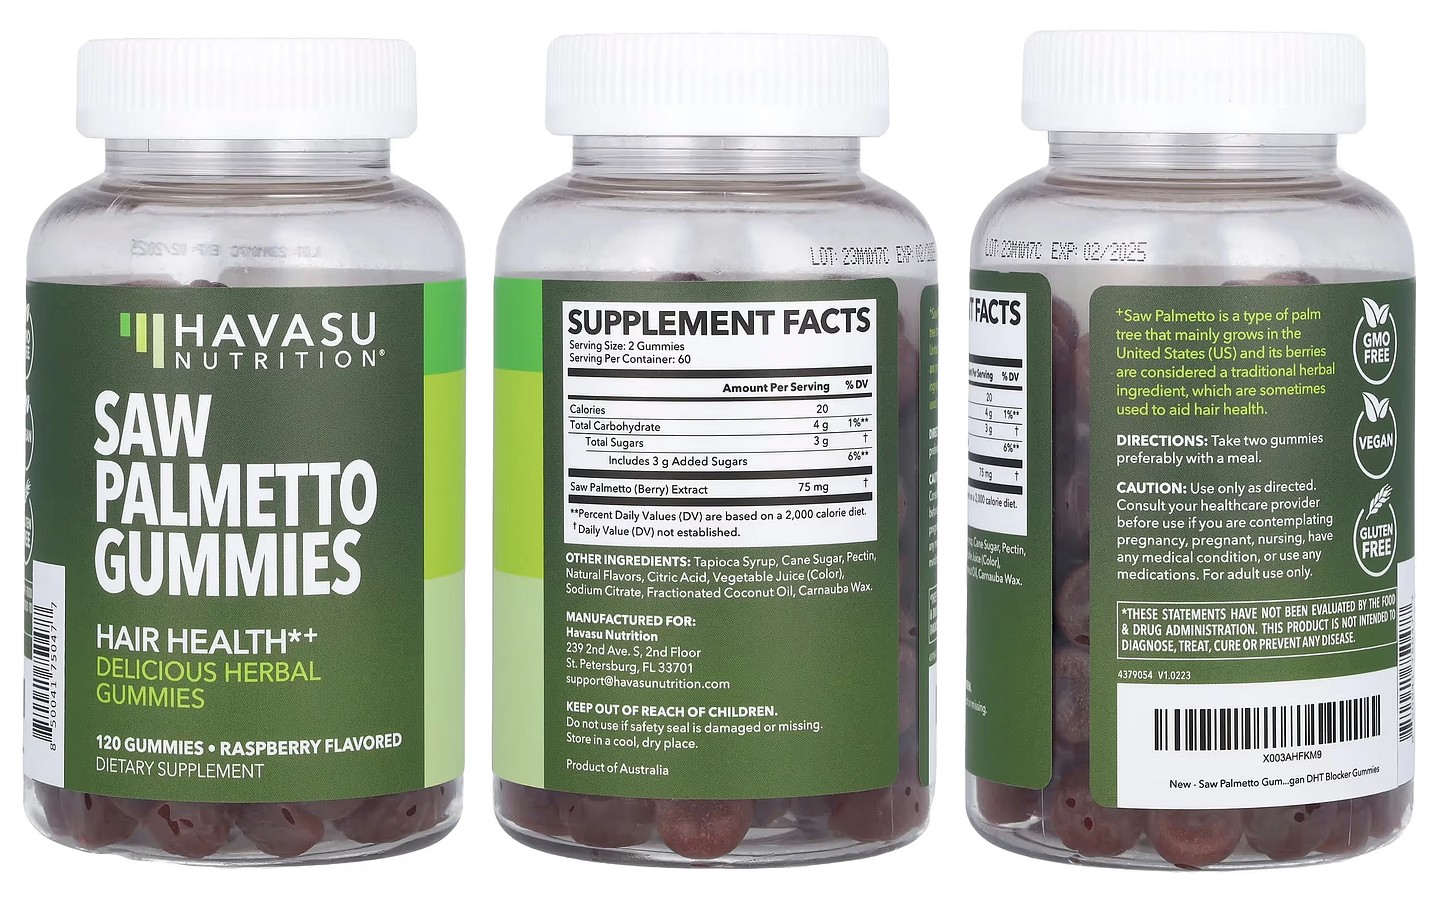 Havasu Nutrition, Saw Palmetto Gummies packaging